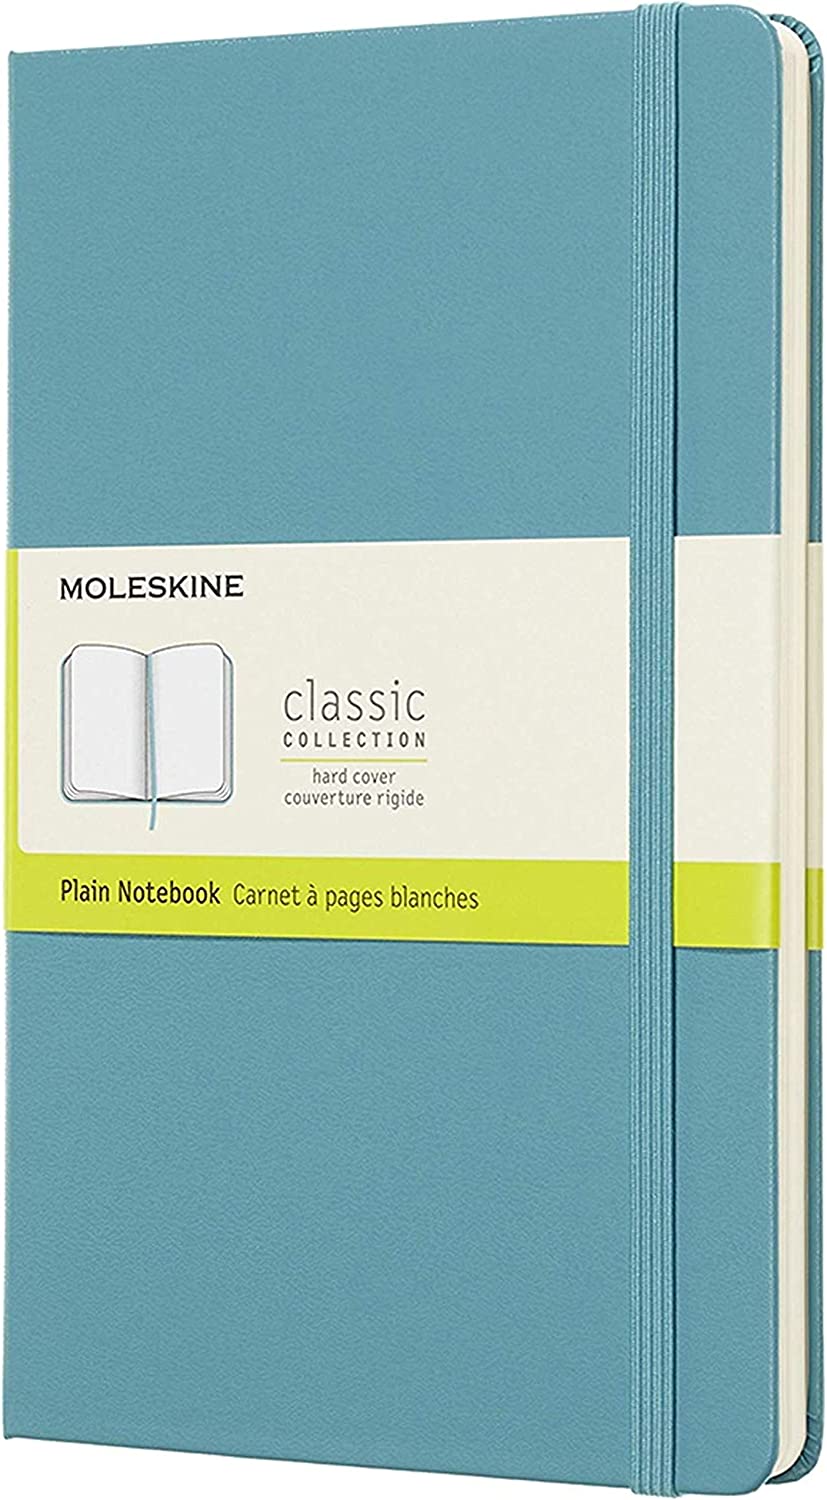 Moleskine Papir Pocket / Reef Blue / Hardcover Moleskine Classic notesbog - Plain